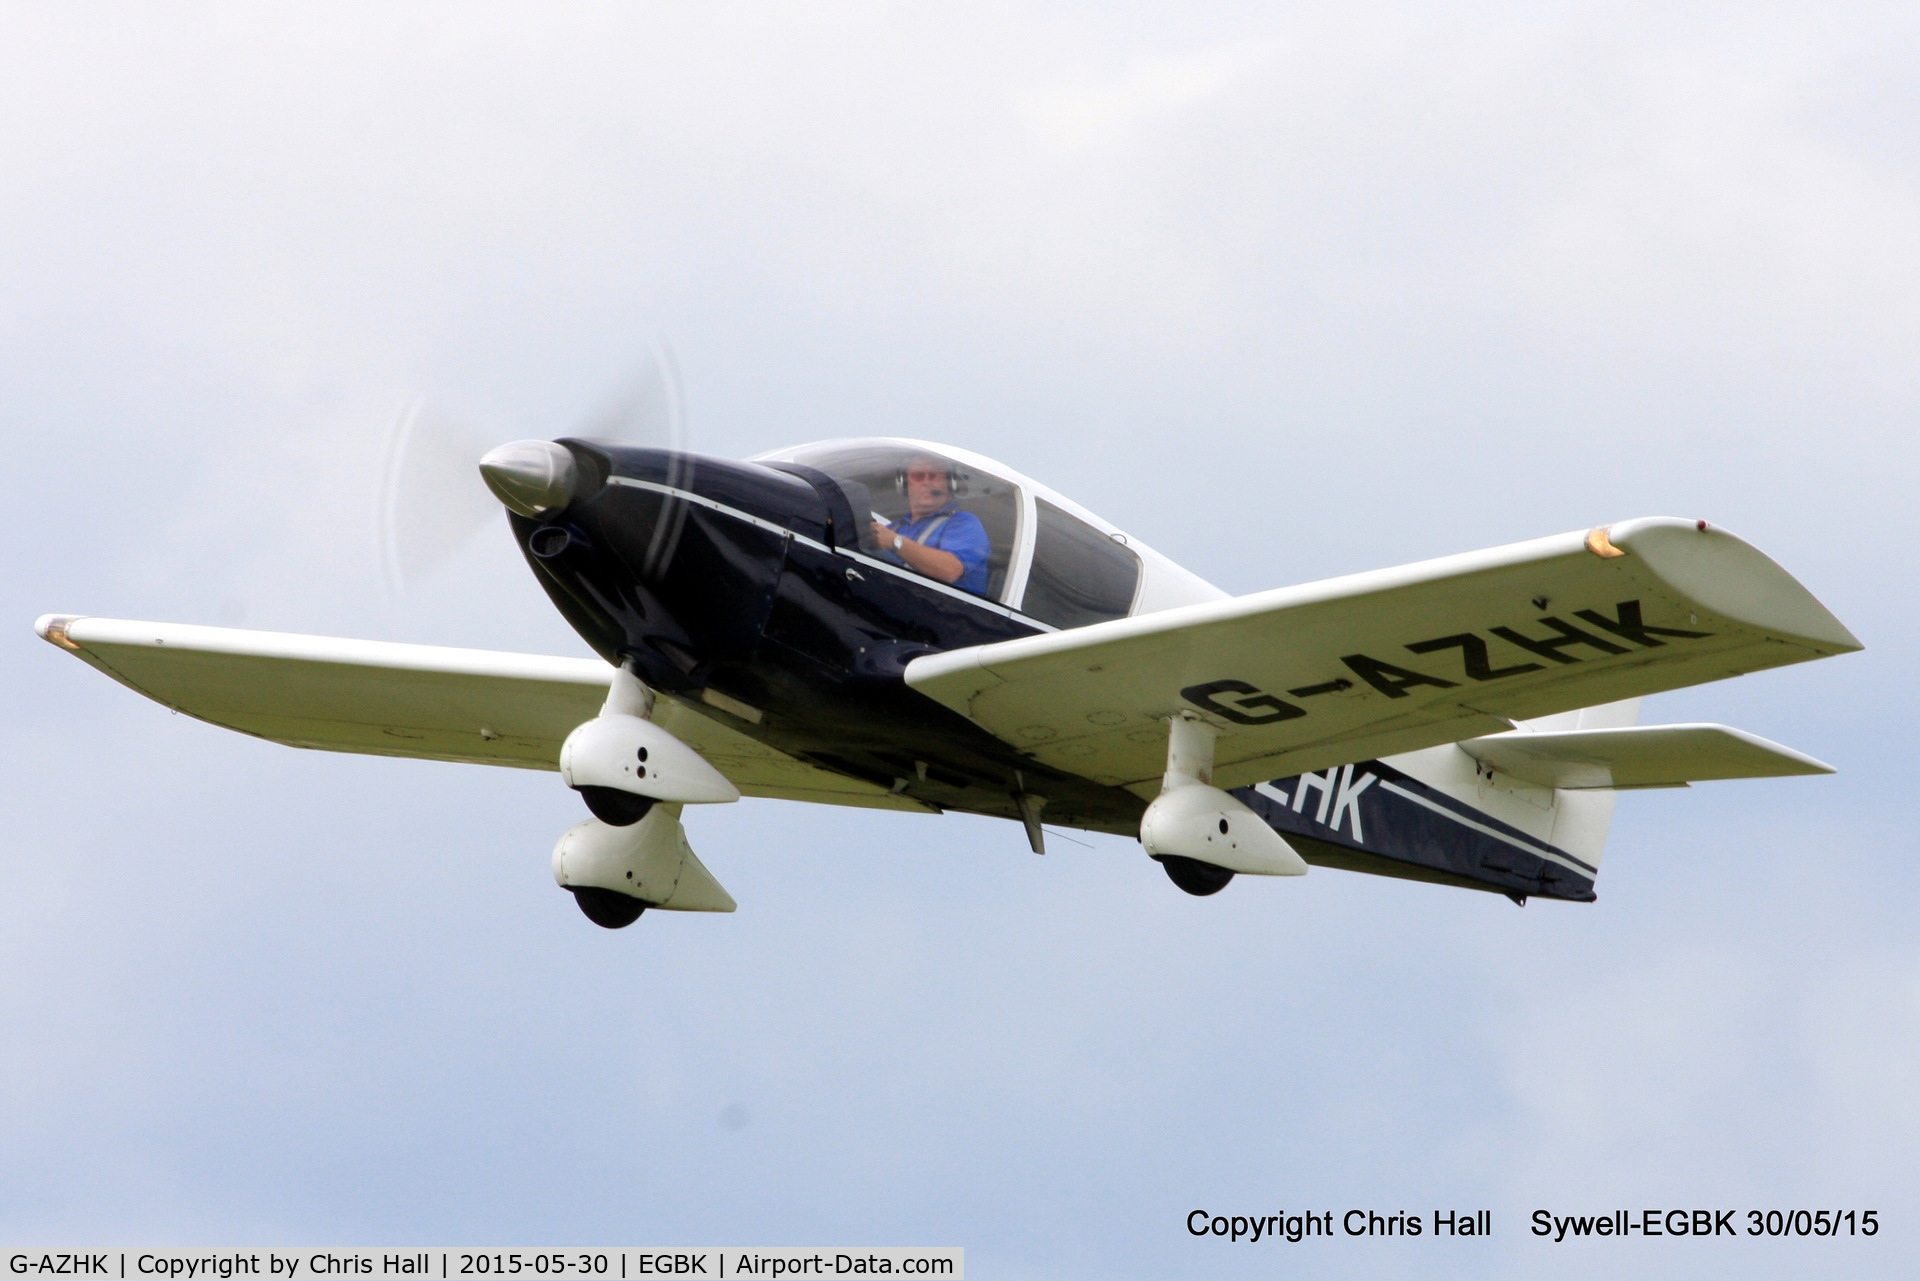 G-AZHK, 1971 Robin HR-100-200B Royale C/N 113, at Aeroexpo 2015